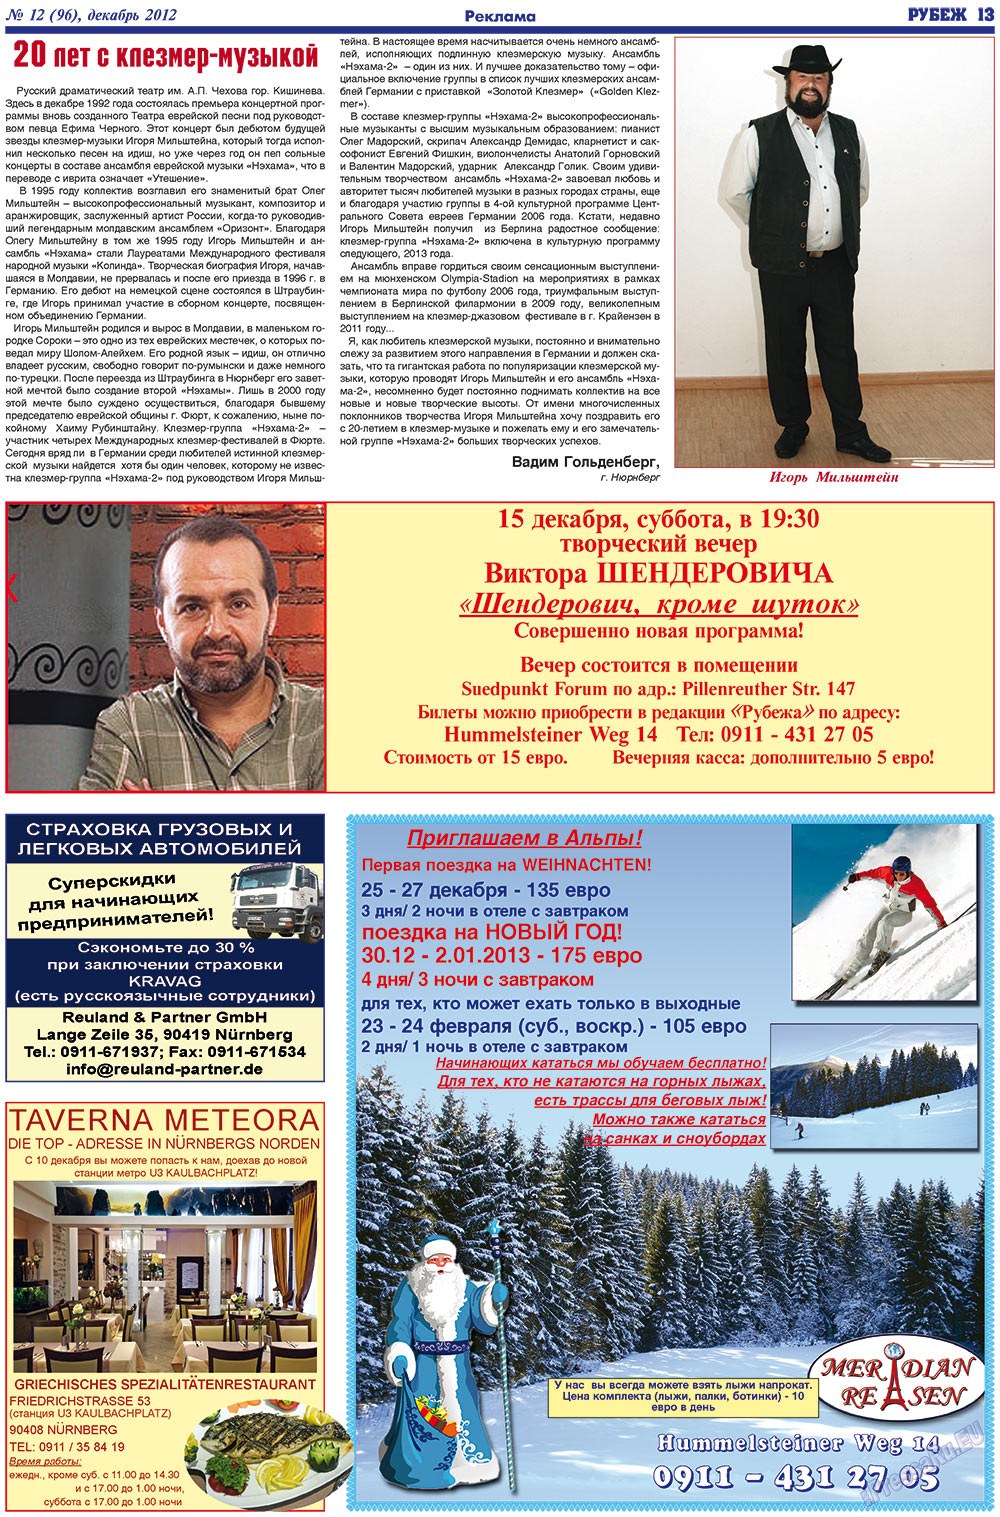 Рубеж, газета. 2012 №12 стр.13